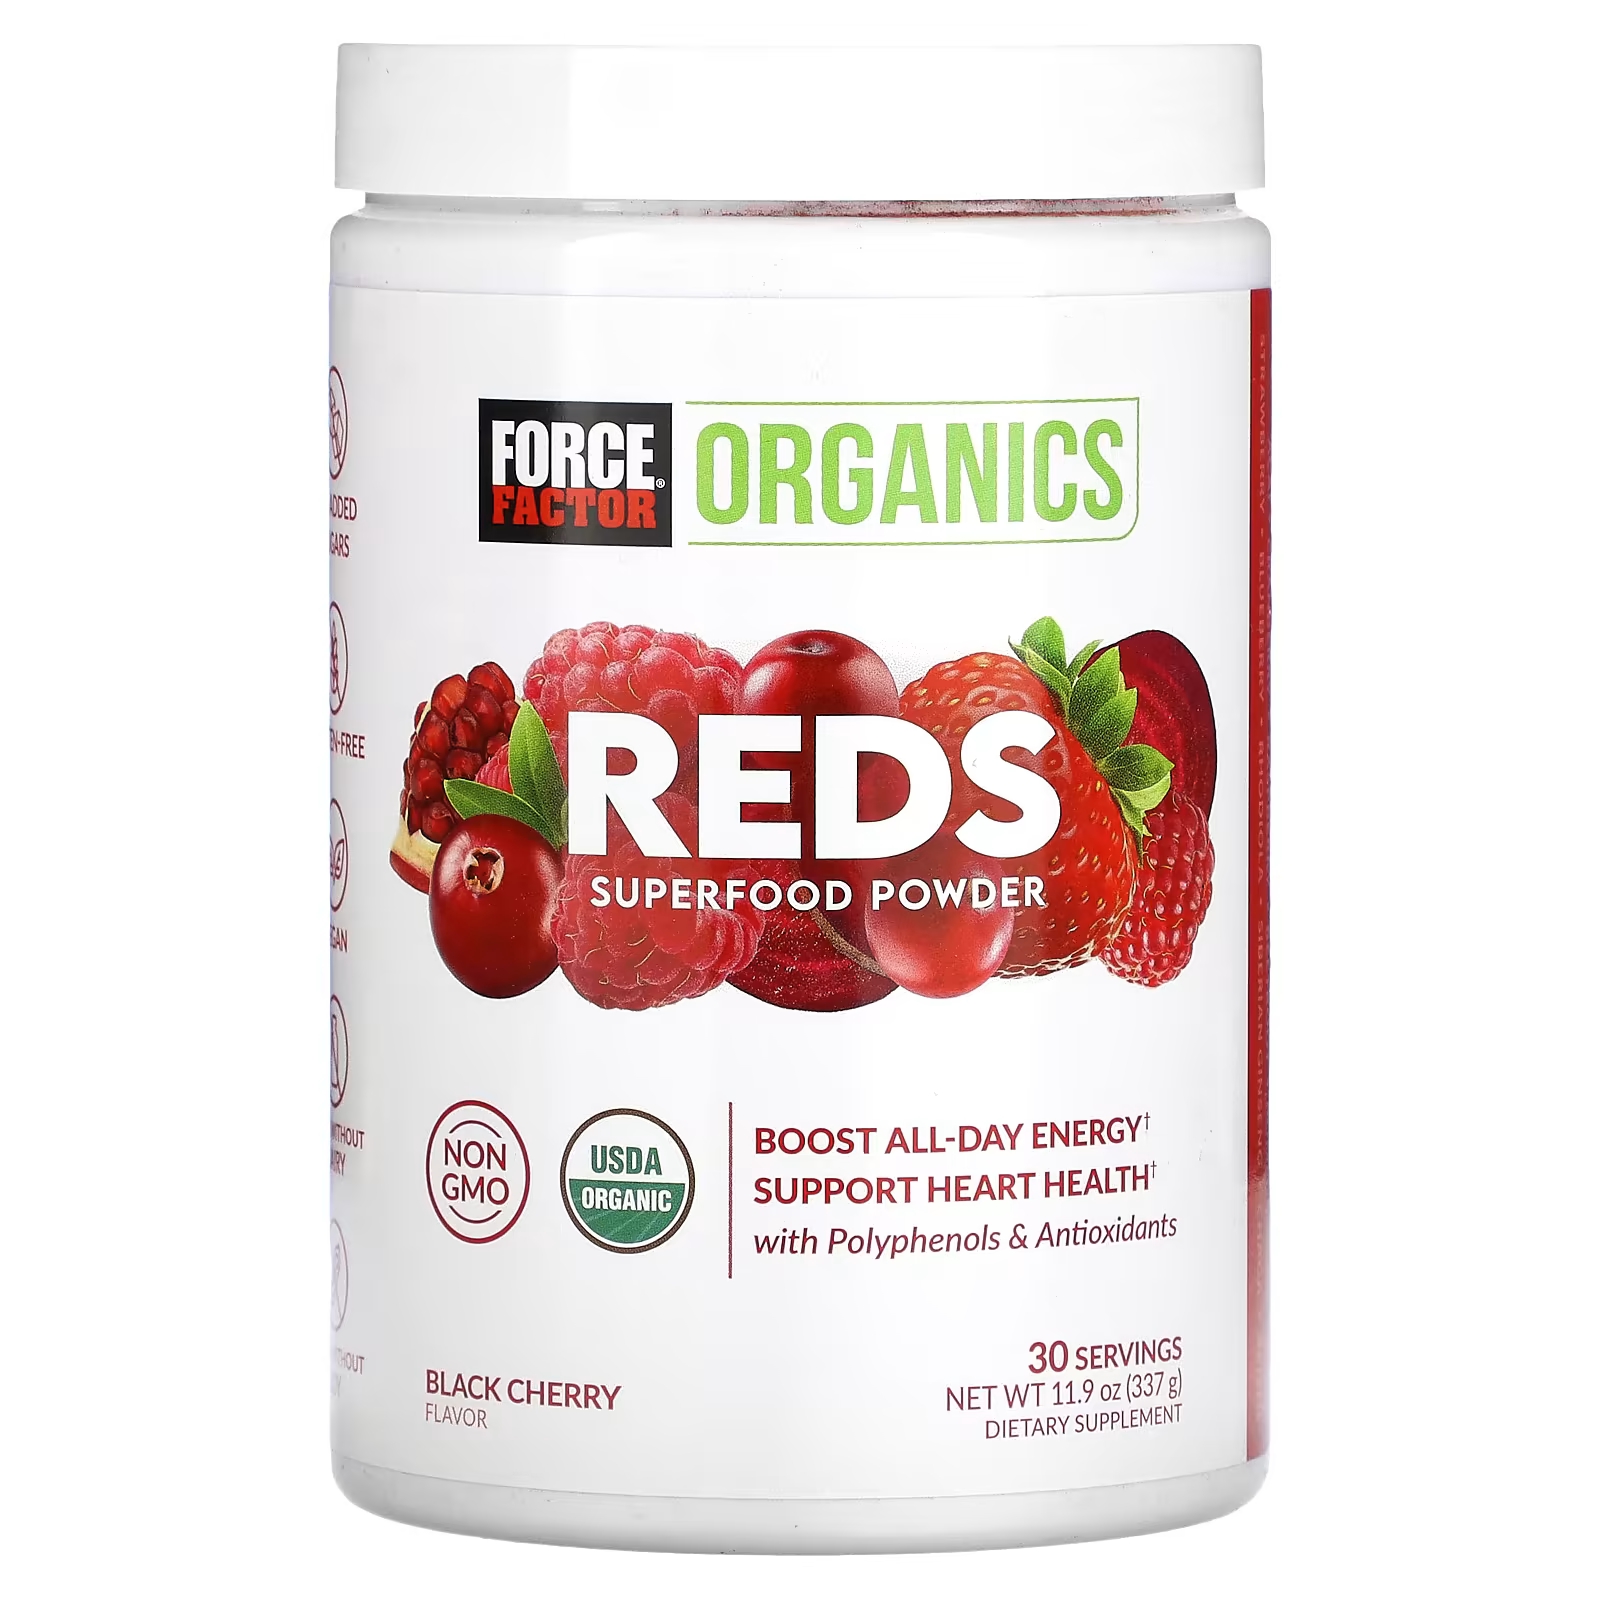 Пищевая добавка Force Factor Organics Reds Superfood Powder Black Cherry, 337 г